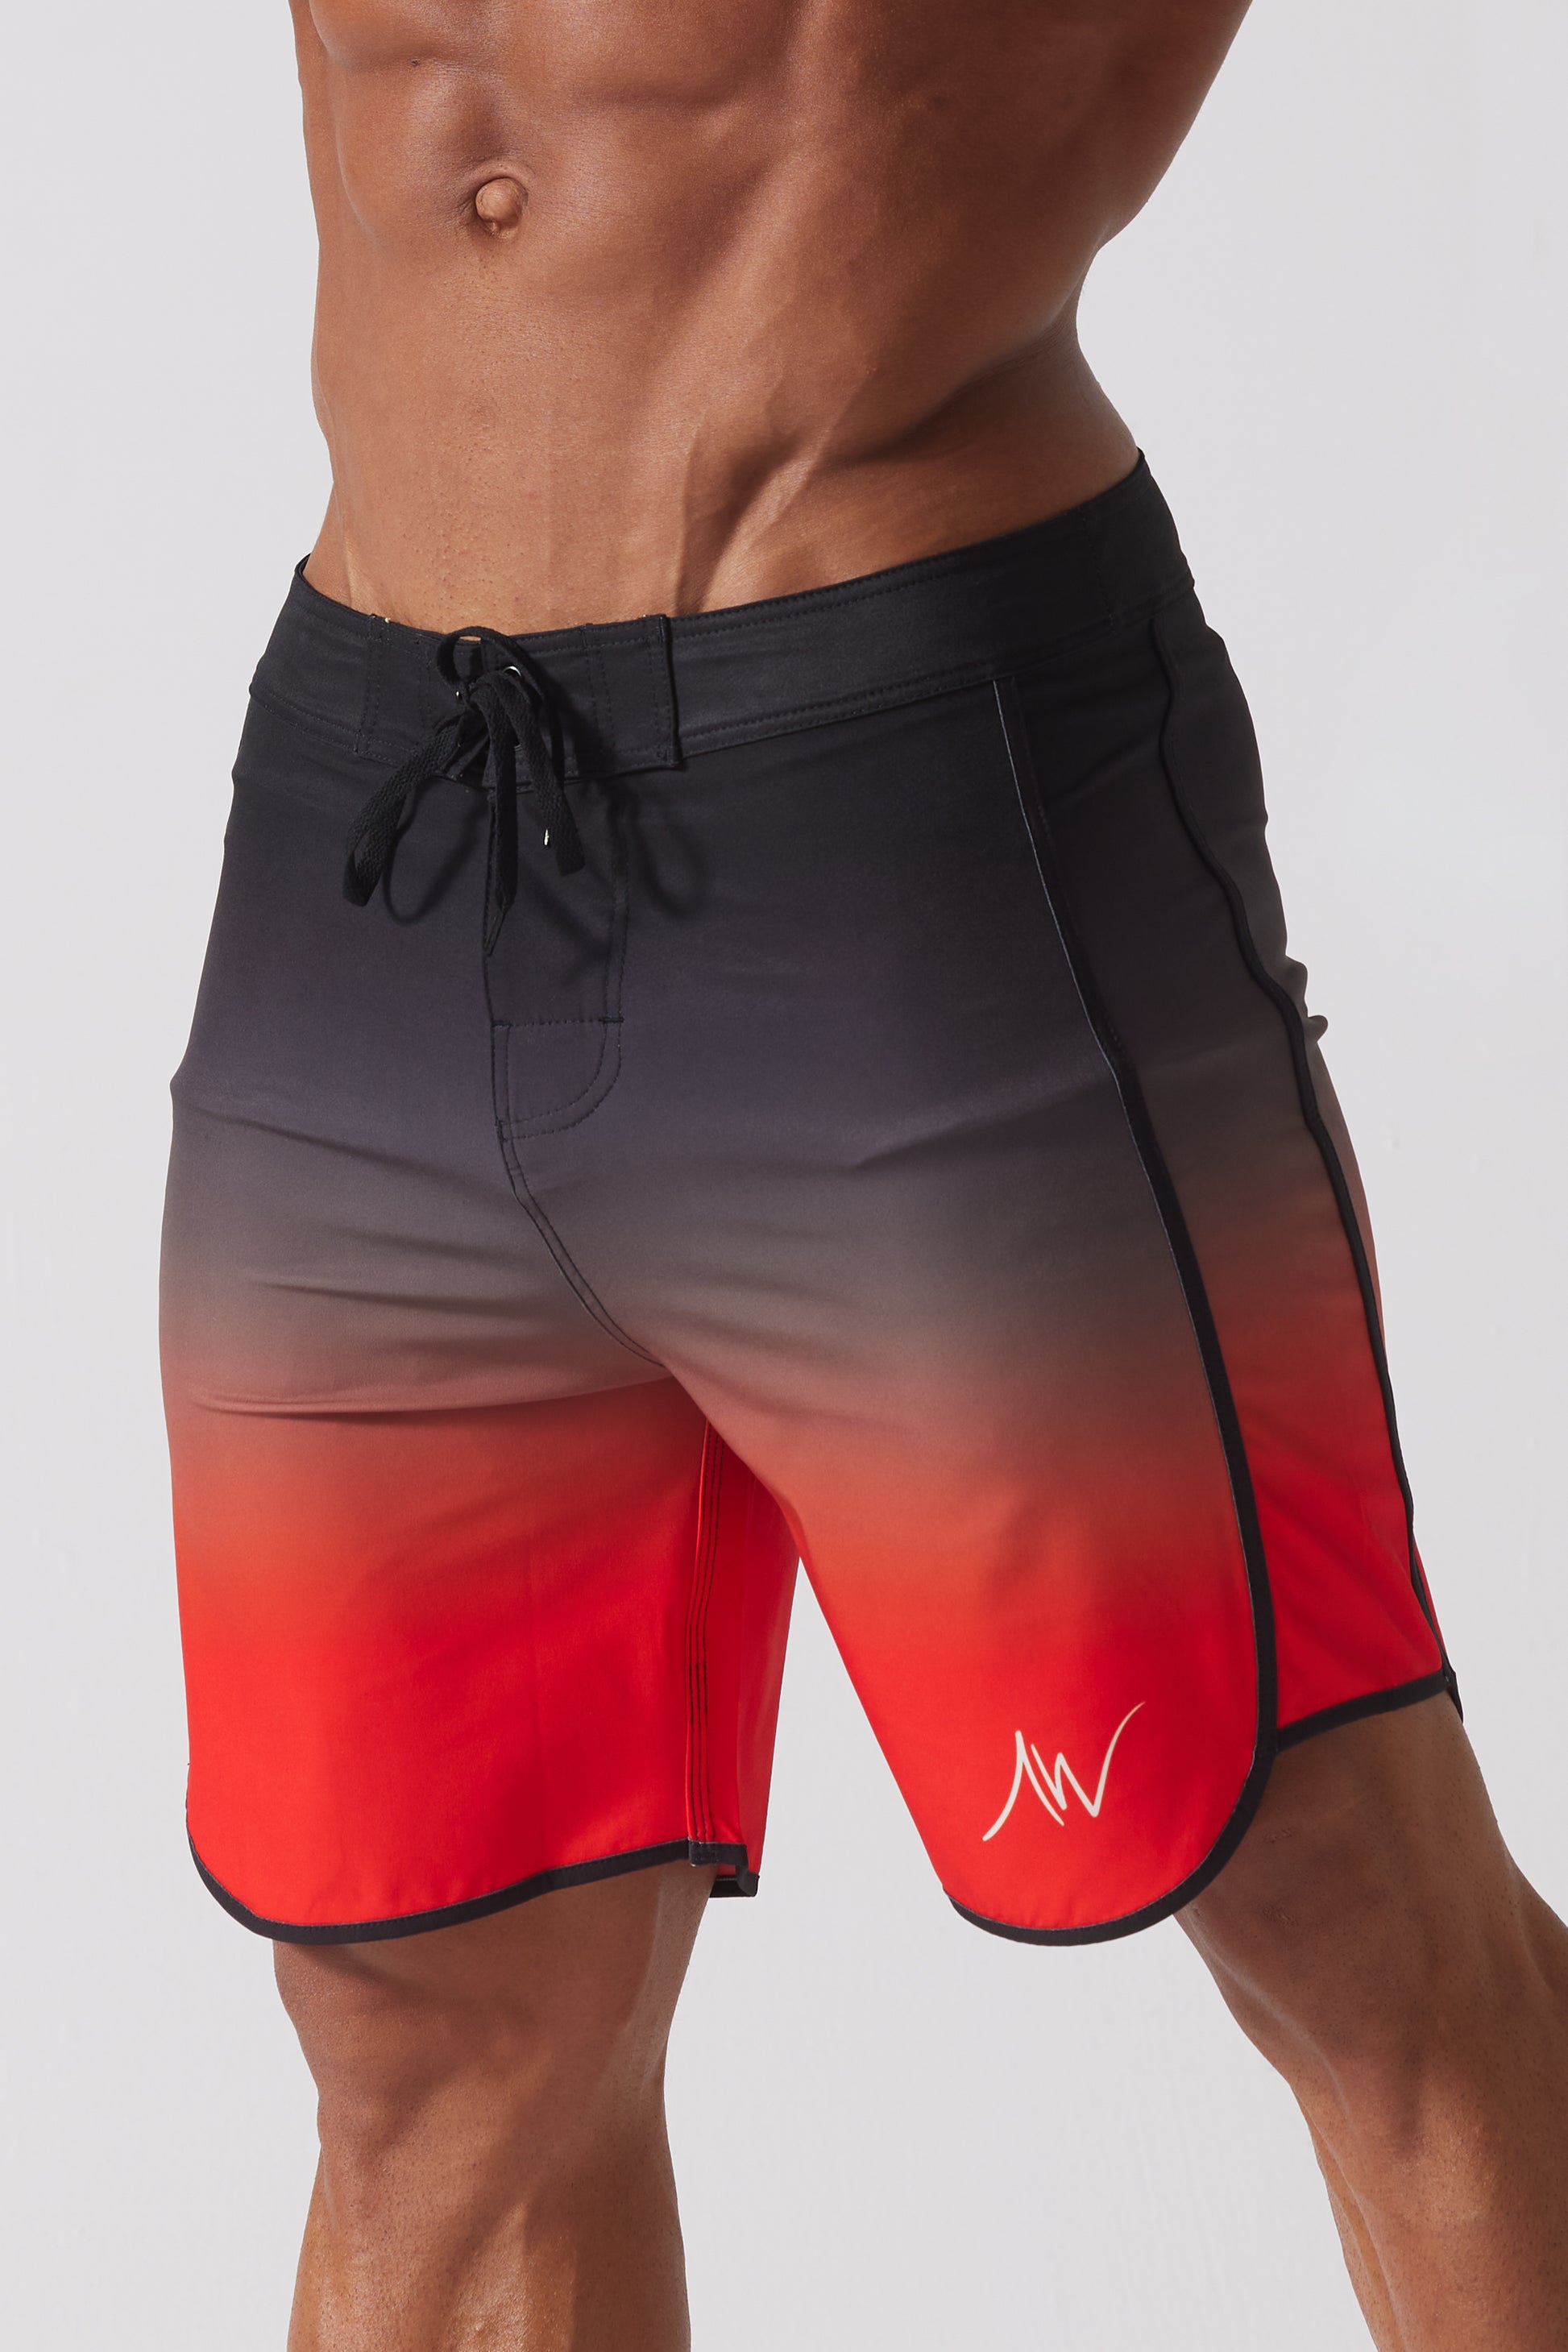 Black & Red Ombre Men's Fitness Board Shorts - Shop now – ALITE WEAR